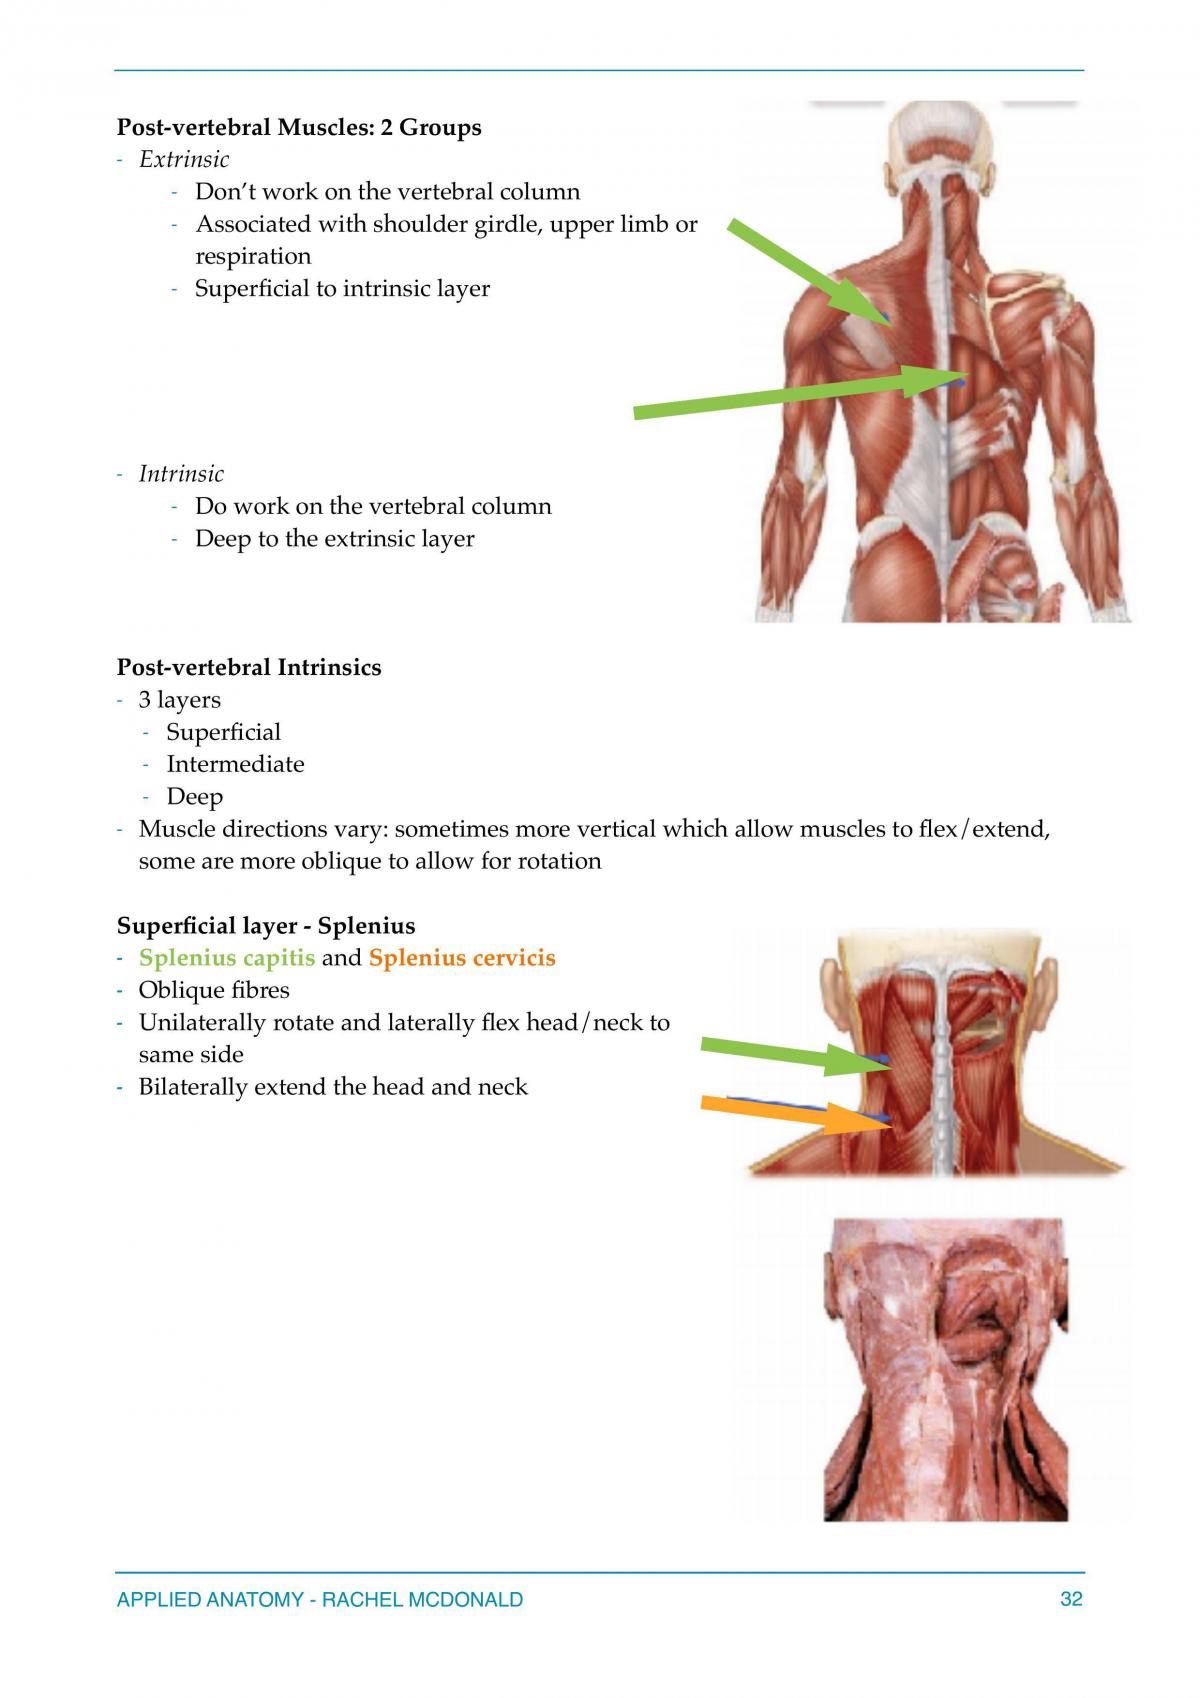 Applied Anatomy Summary Weeks 1 - 4  - Page 32